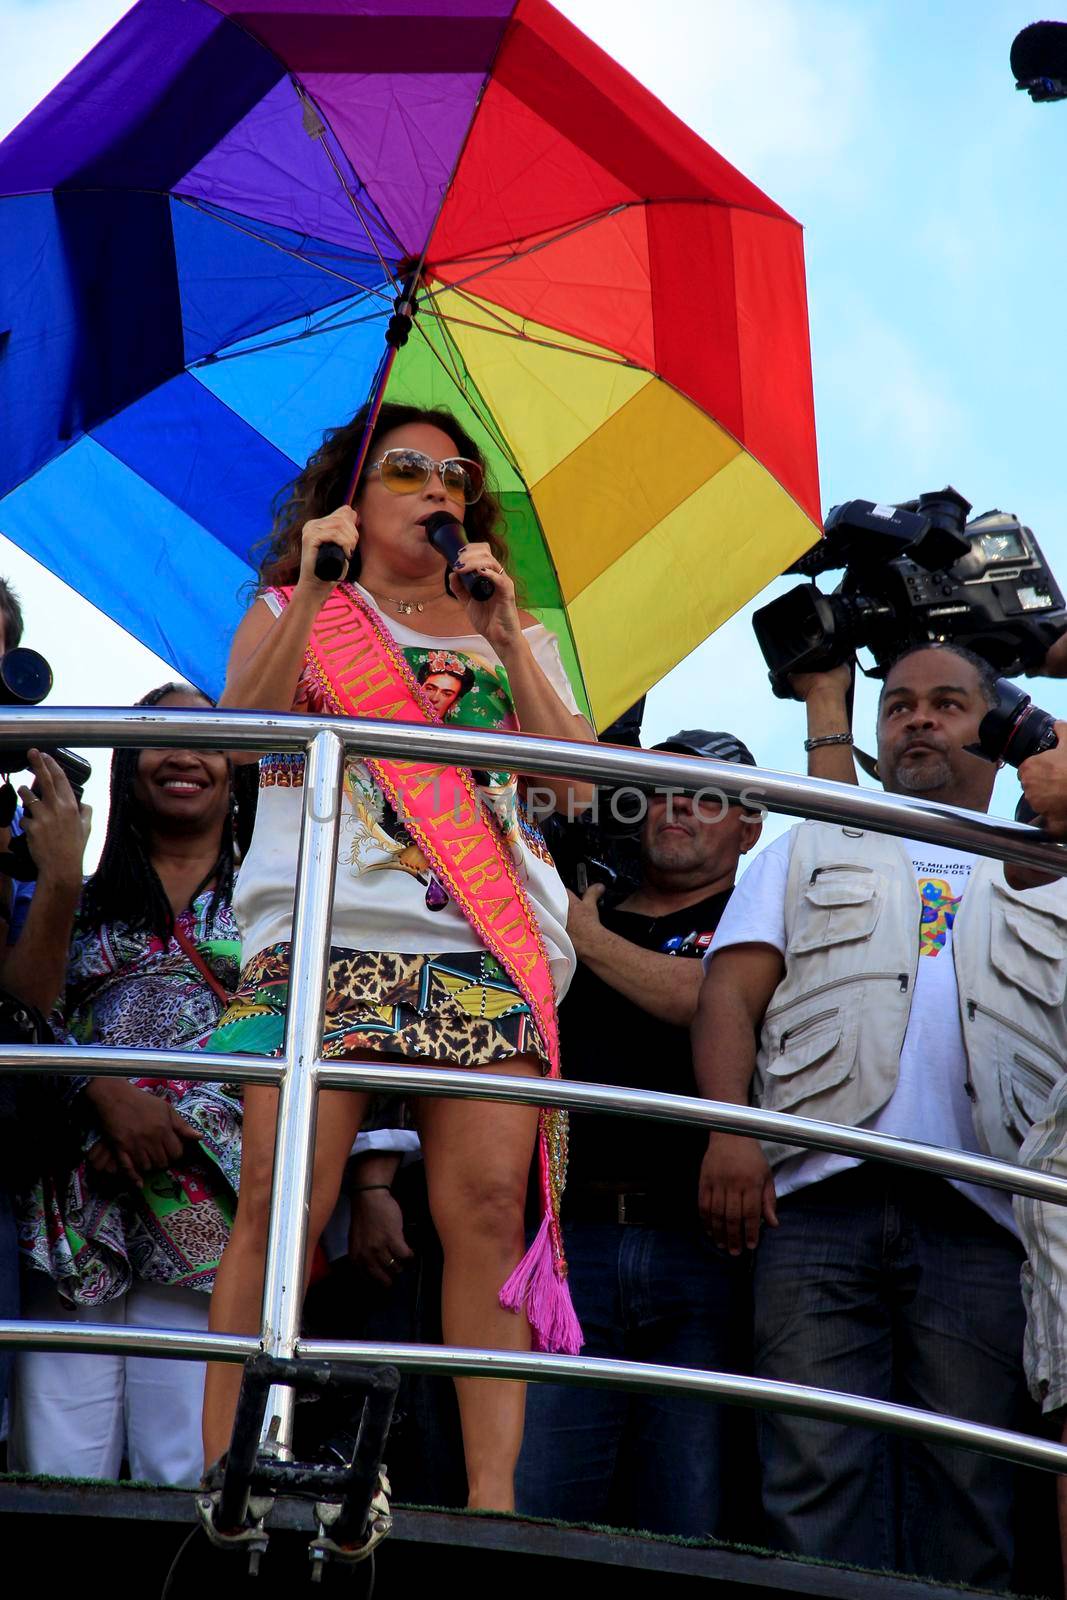 salvador, bahia / brazil - september 8, 2013: singer Daniela Marcury is seen during a gay pride parade in the city of Salvador.